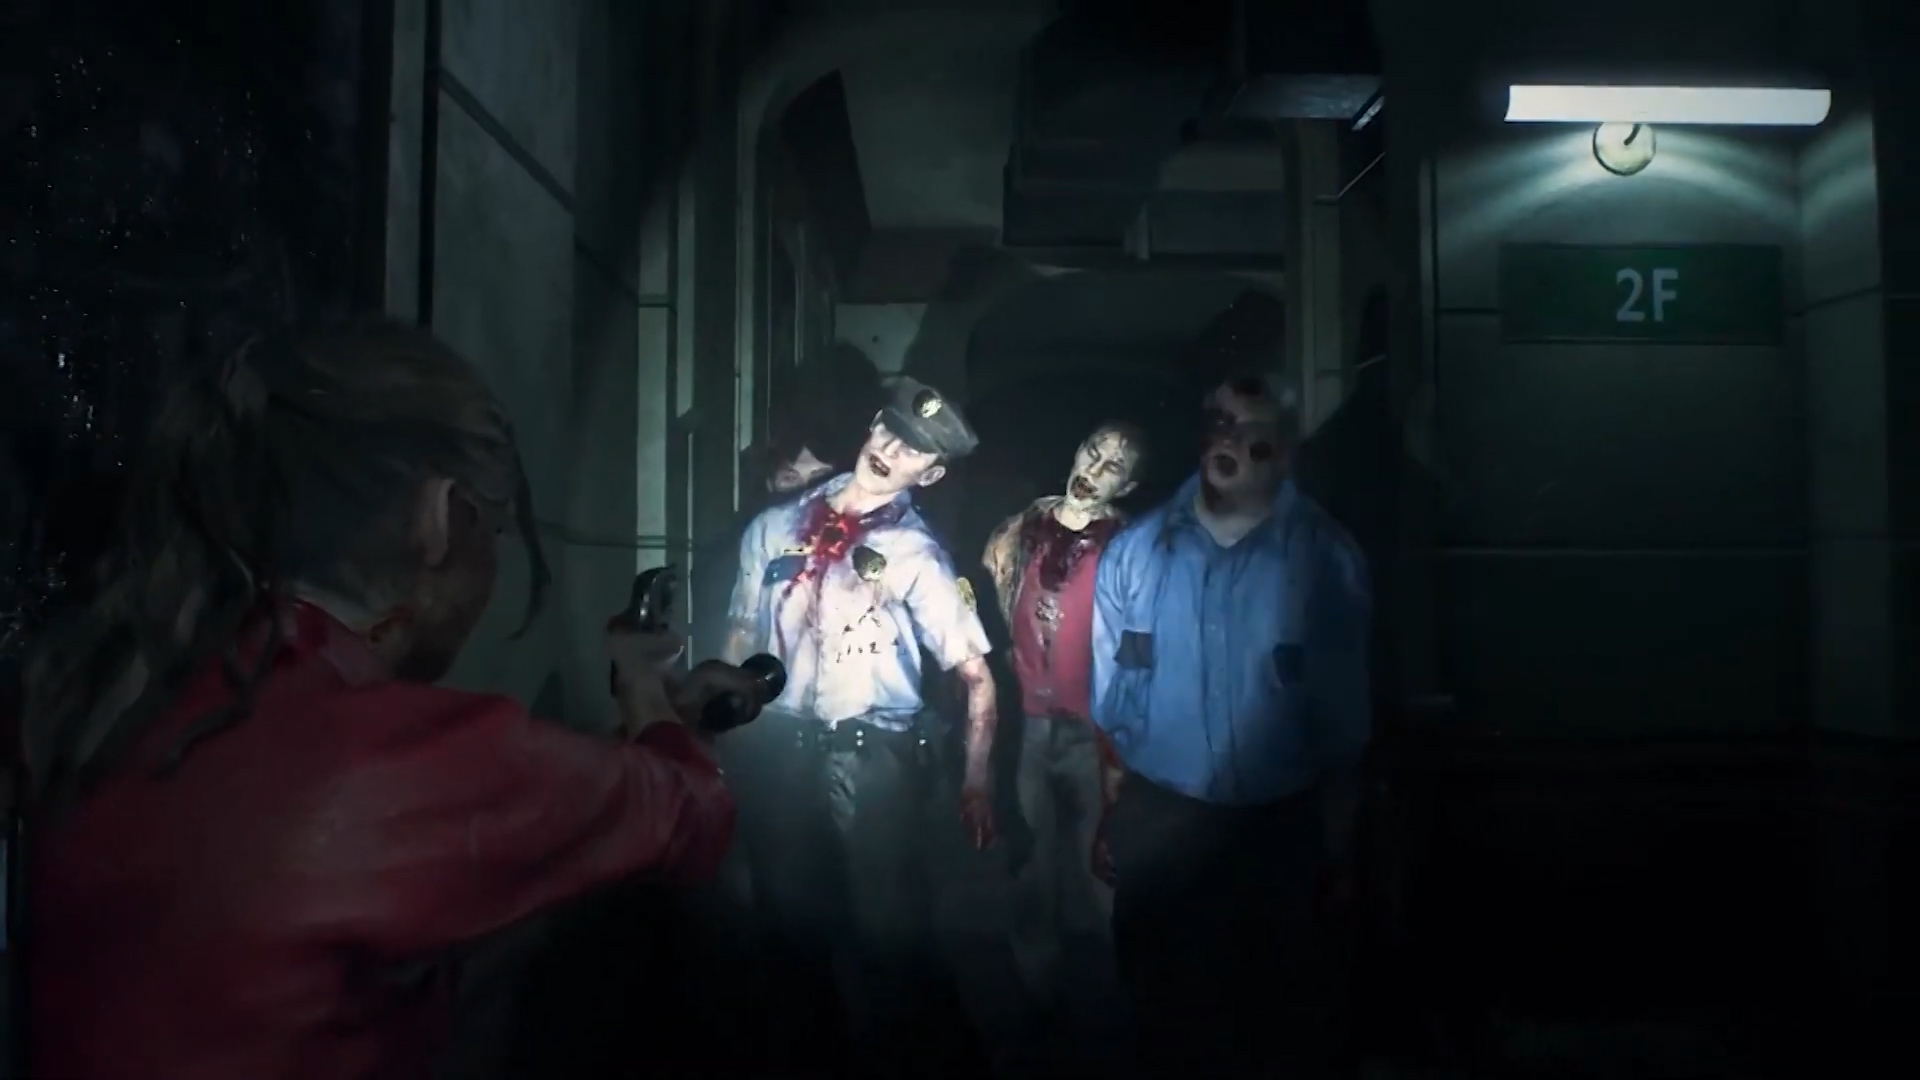 Resident Evil 2: 20 anos do pesadelo em Raccoon City - GameBlast